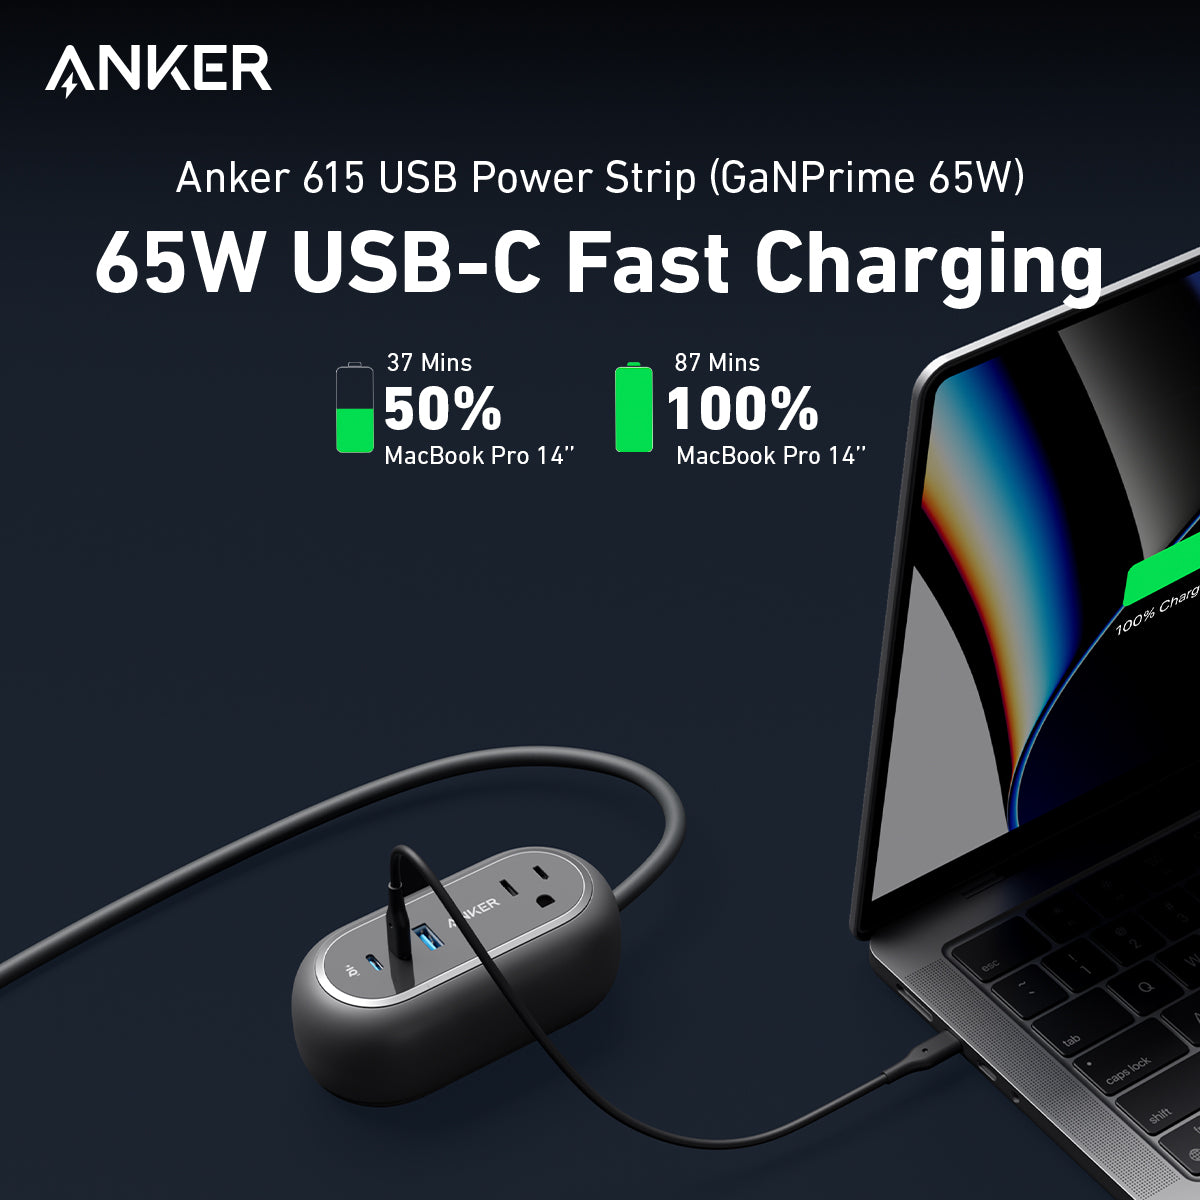 Anker 615 USB Power Strip (65W) GaNPrime